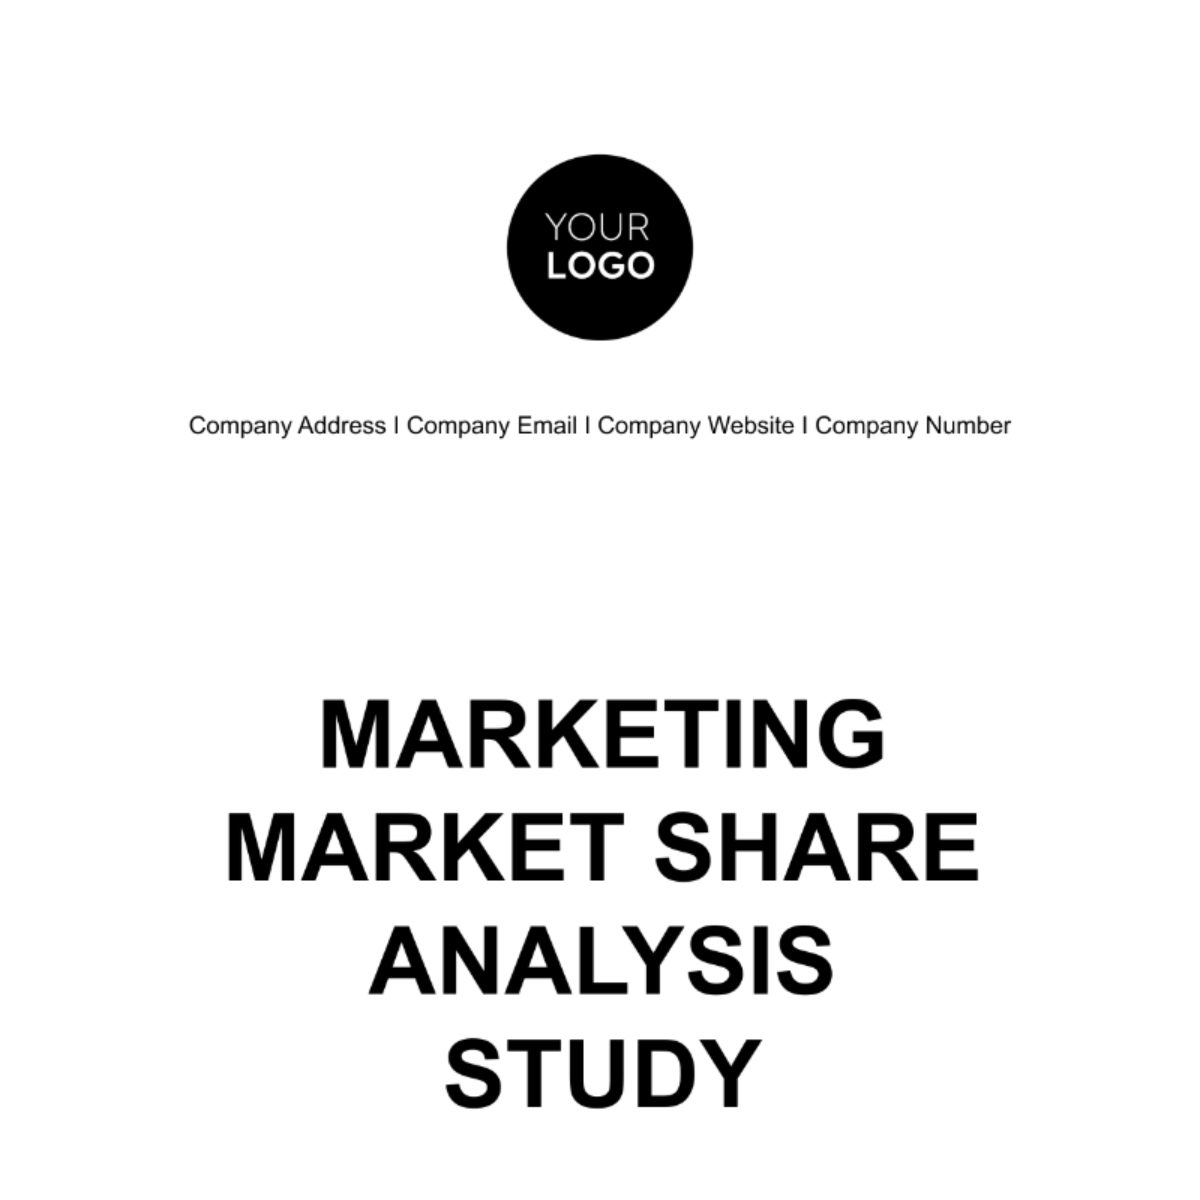 Marketing Market Share Analysis Study Template